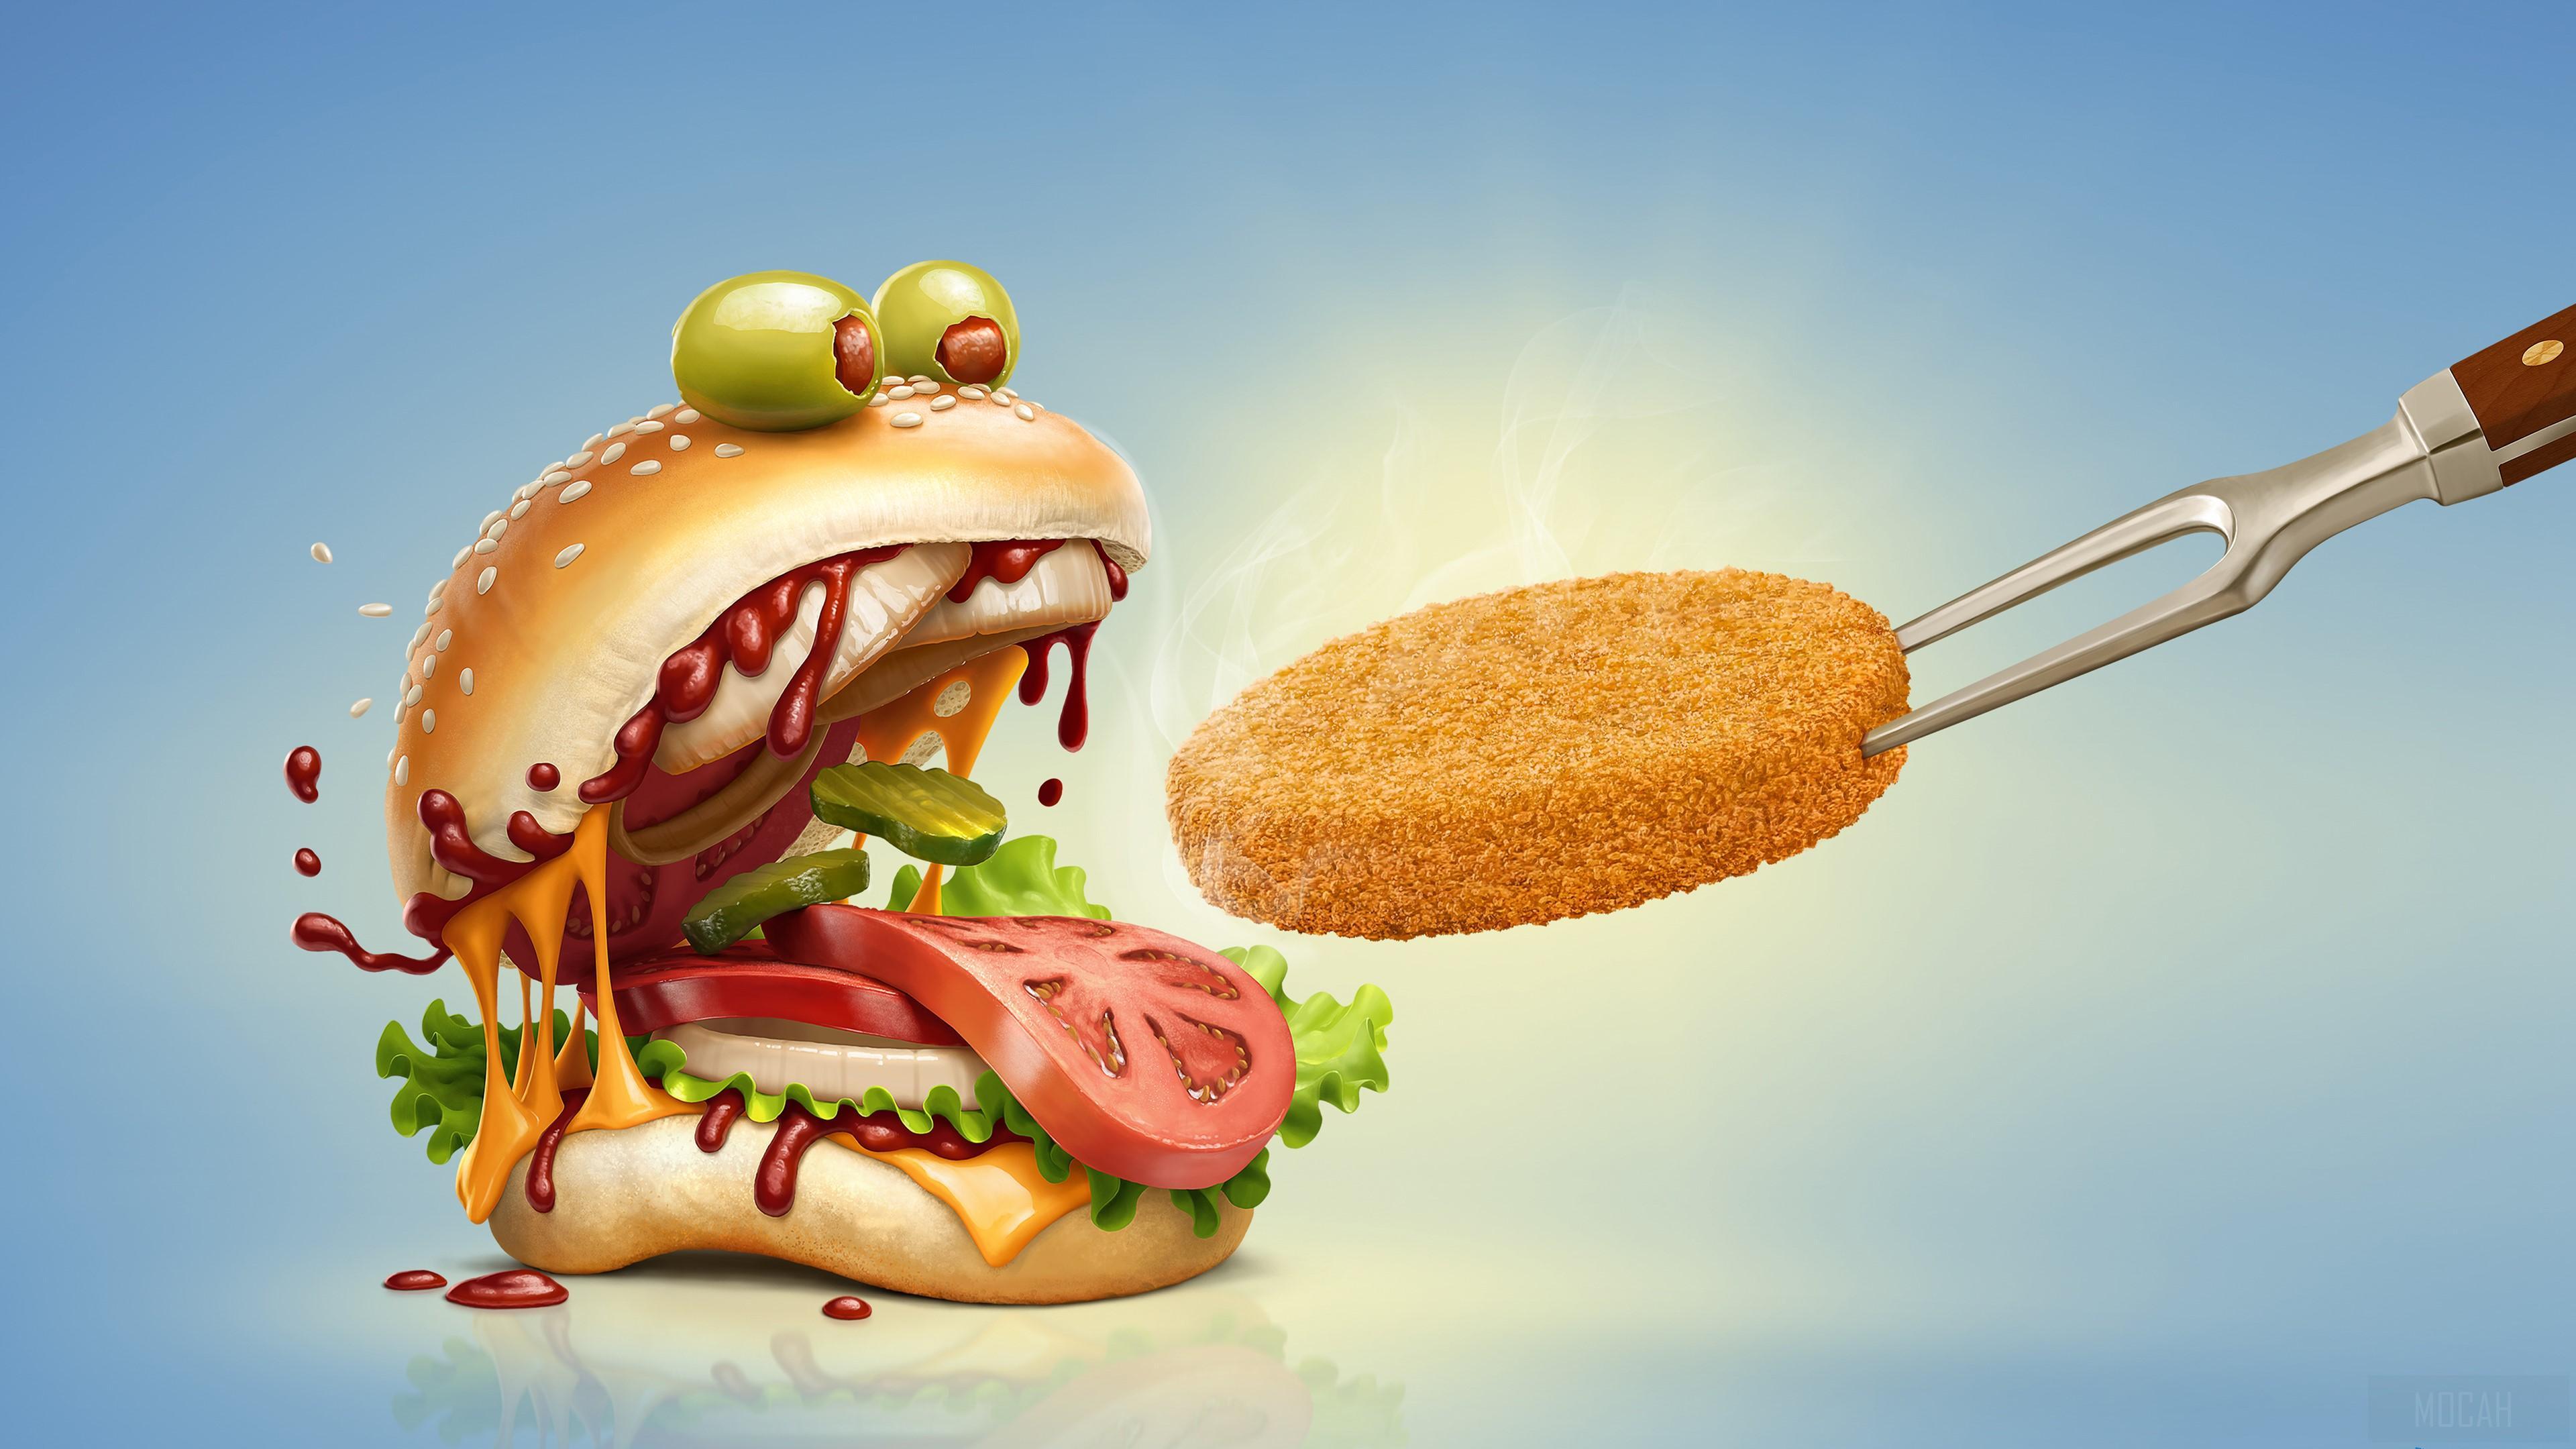 HD wallpaper, Burger Monster 4K